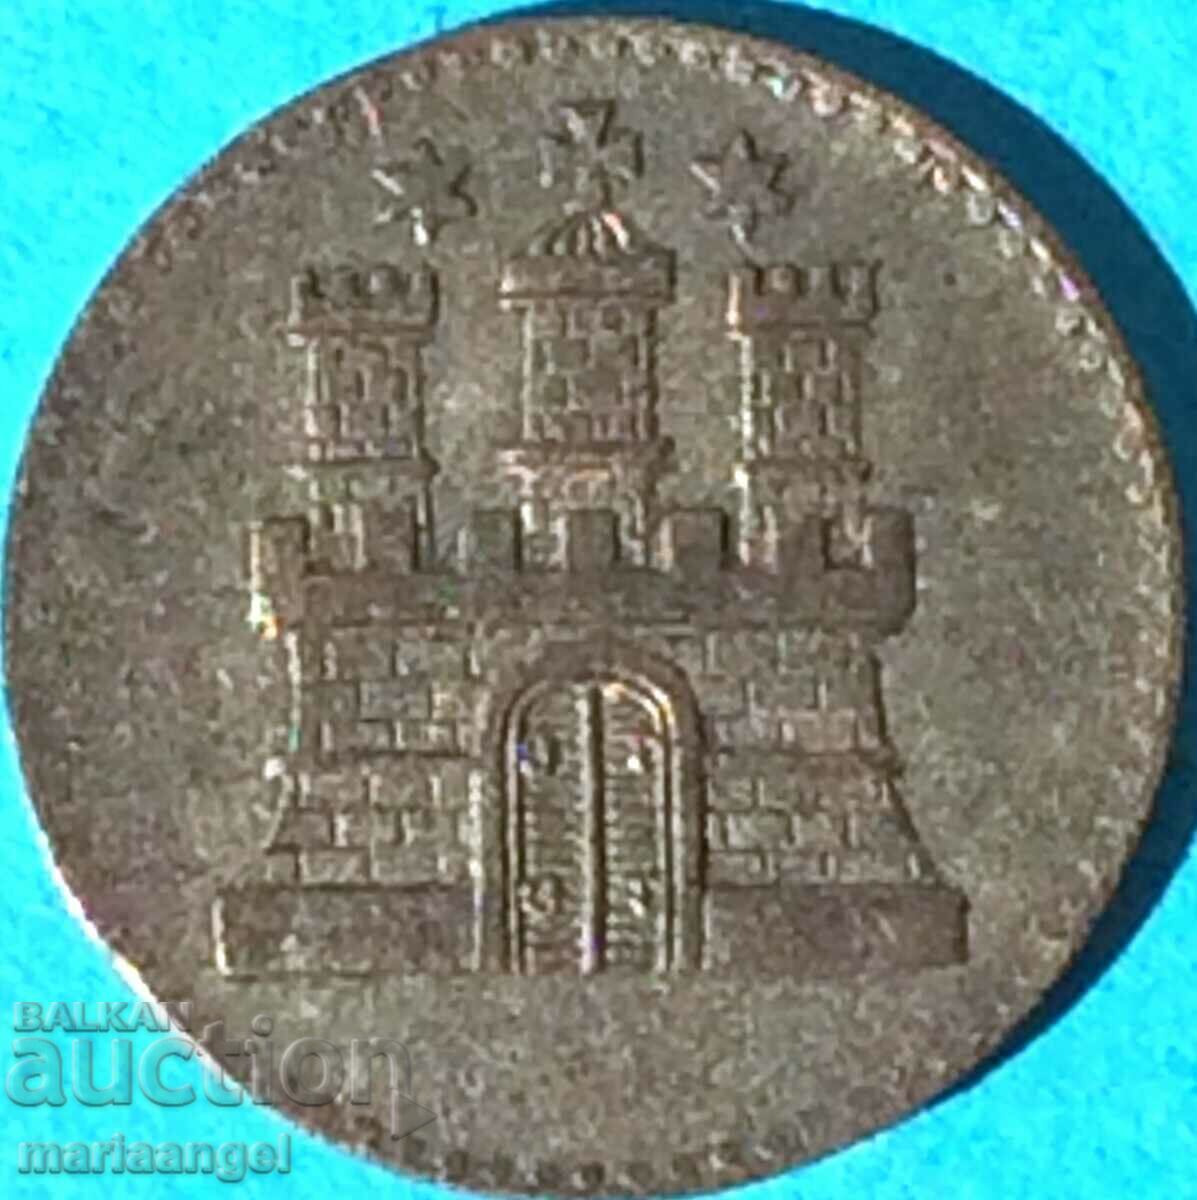 1 dreiling 1855 Germania argint